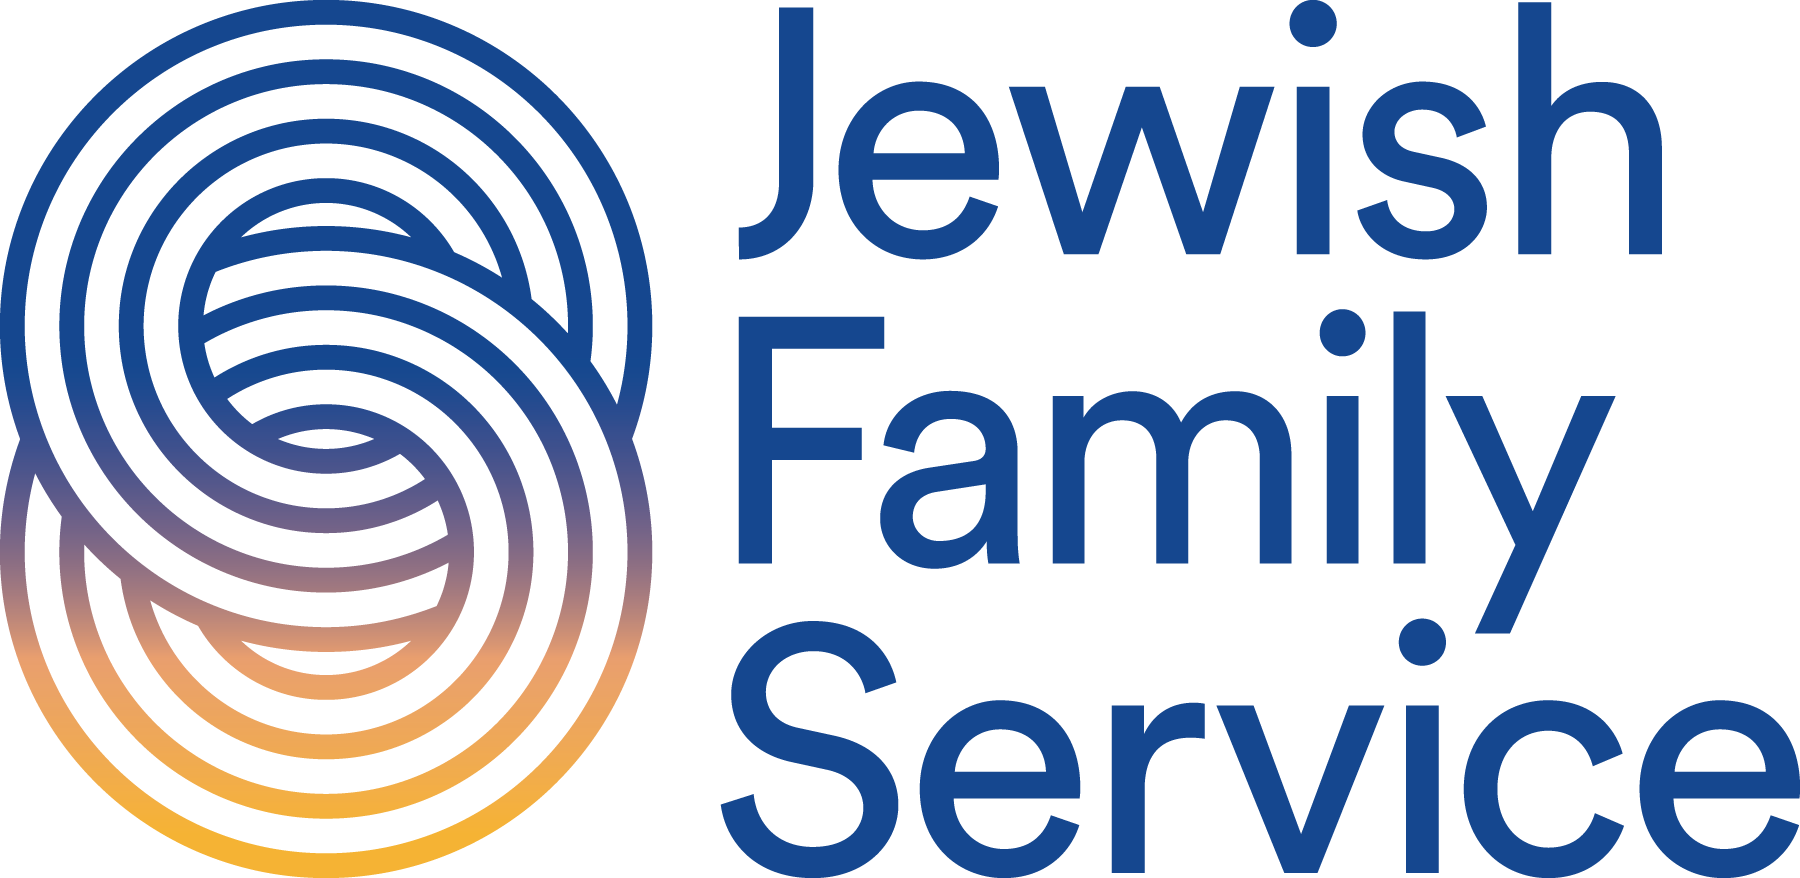 JEWISH FAMILY SERVICE COLORADO INC